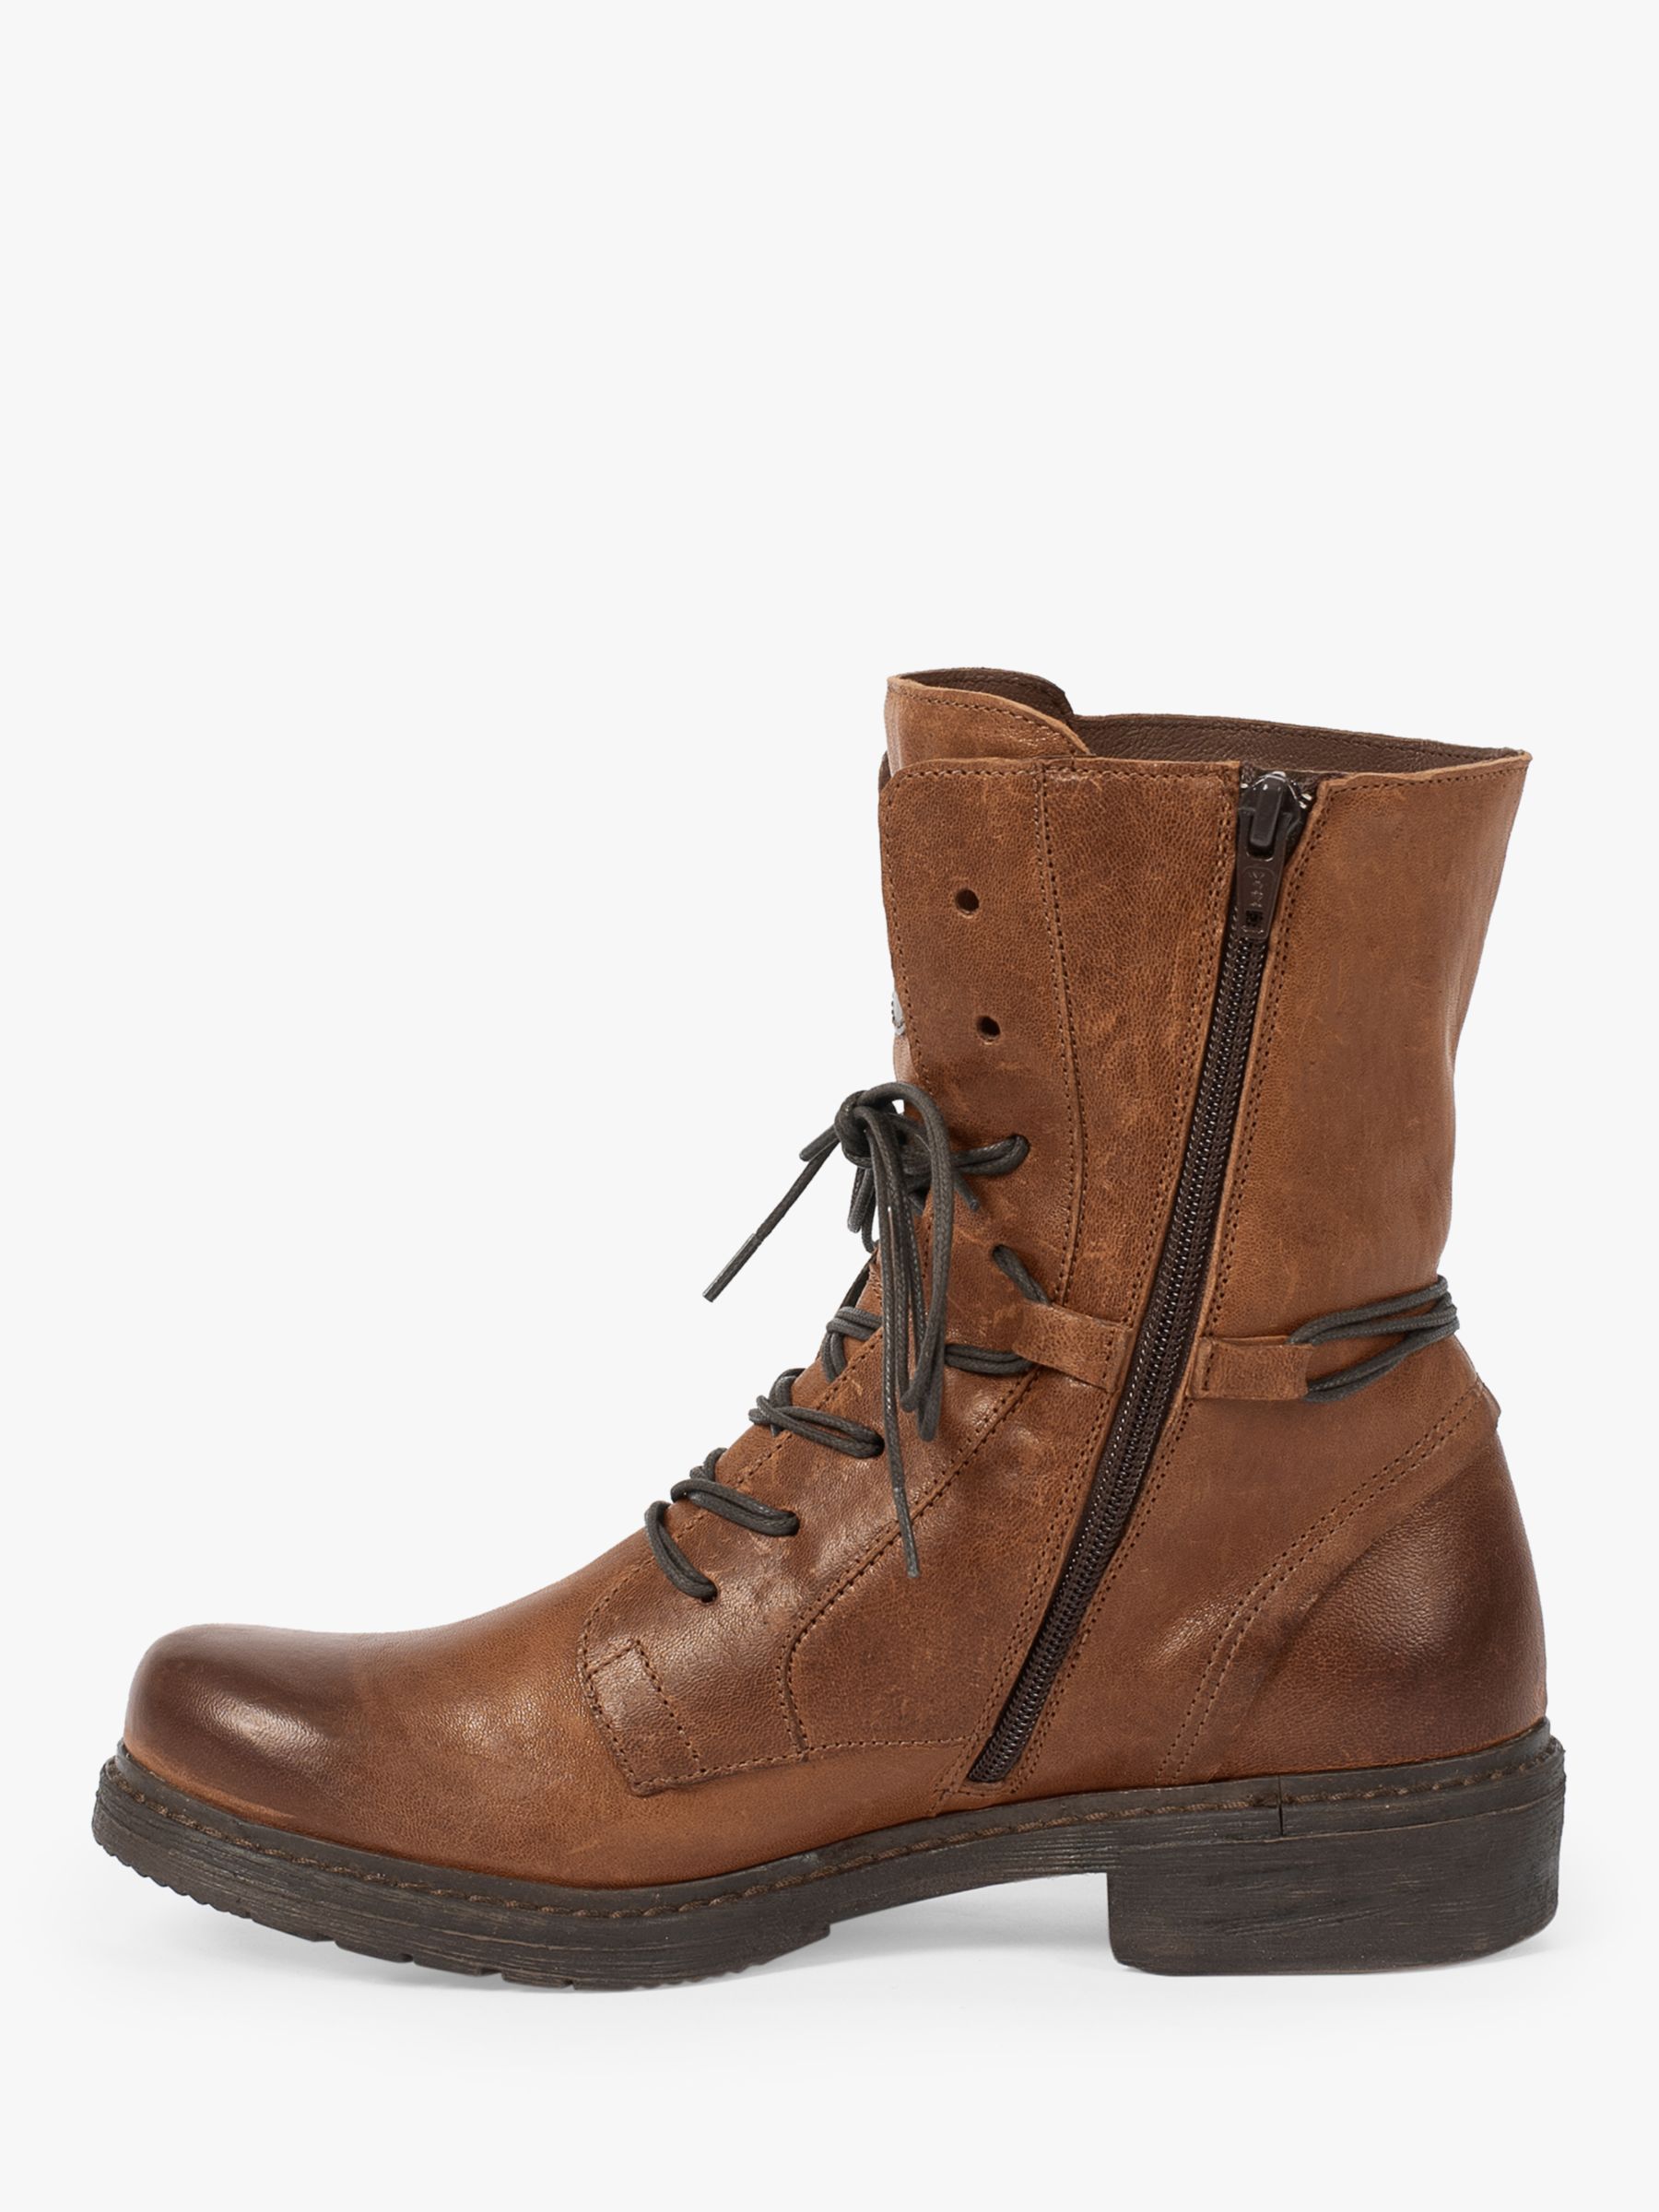 Celtic & Co. Leather Derby Boots, Antique Brown, 3